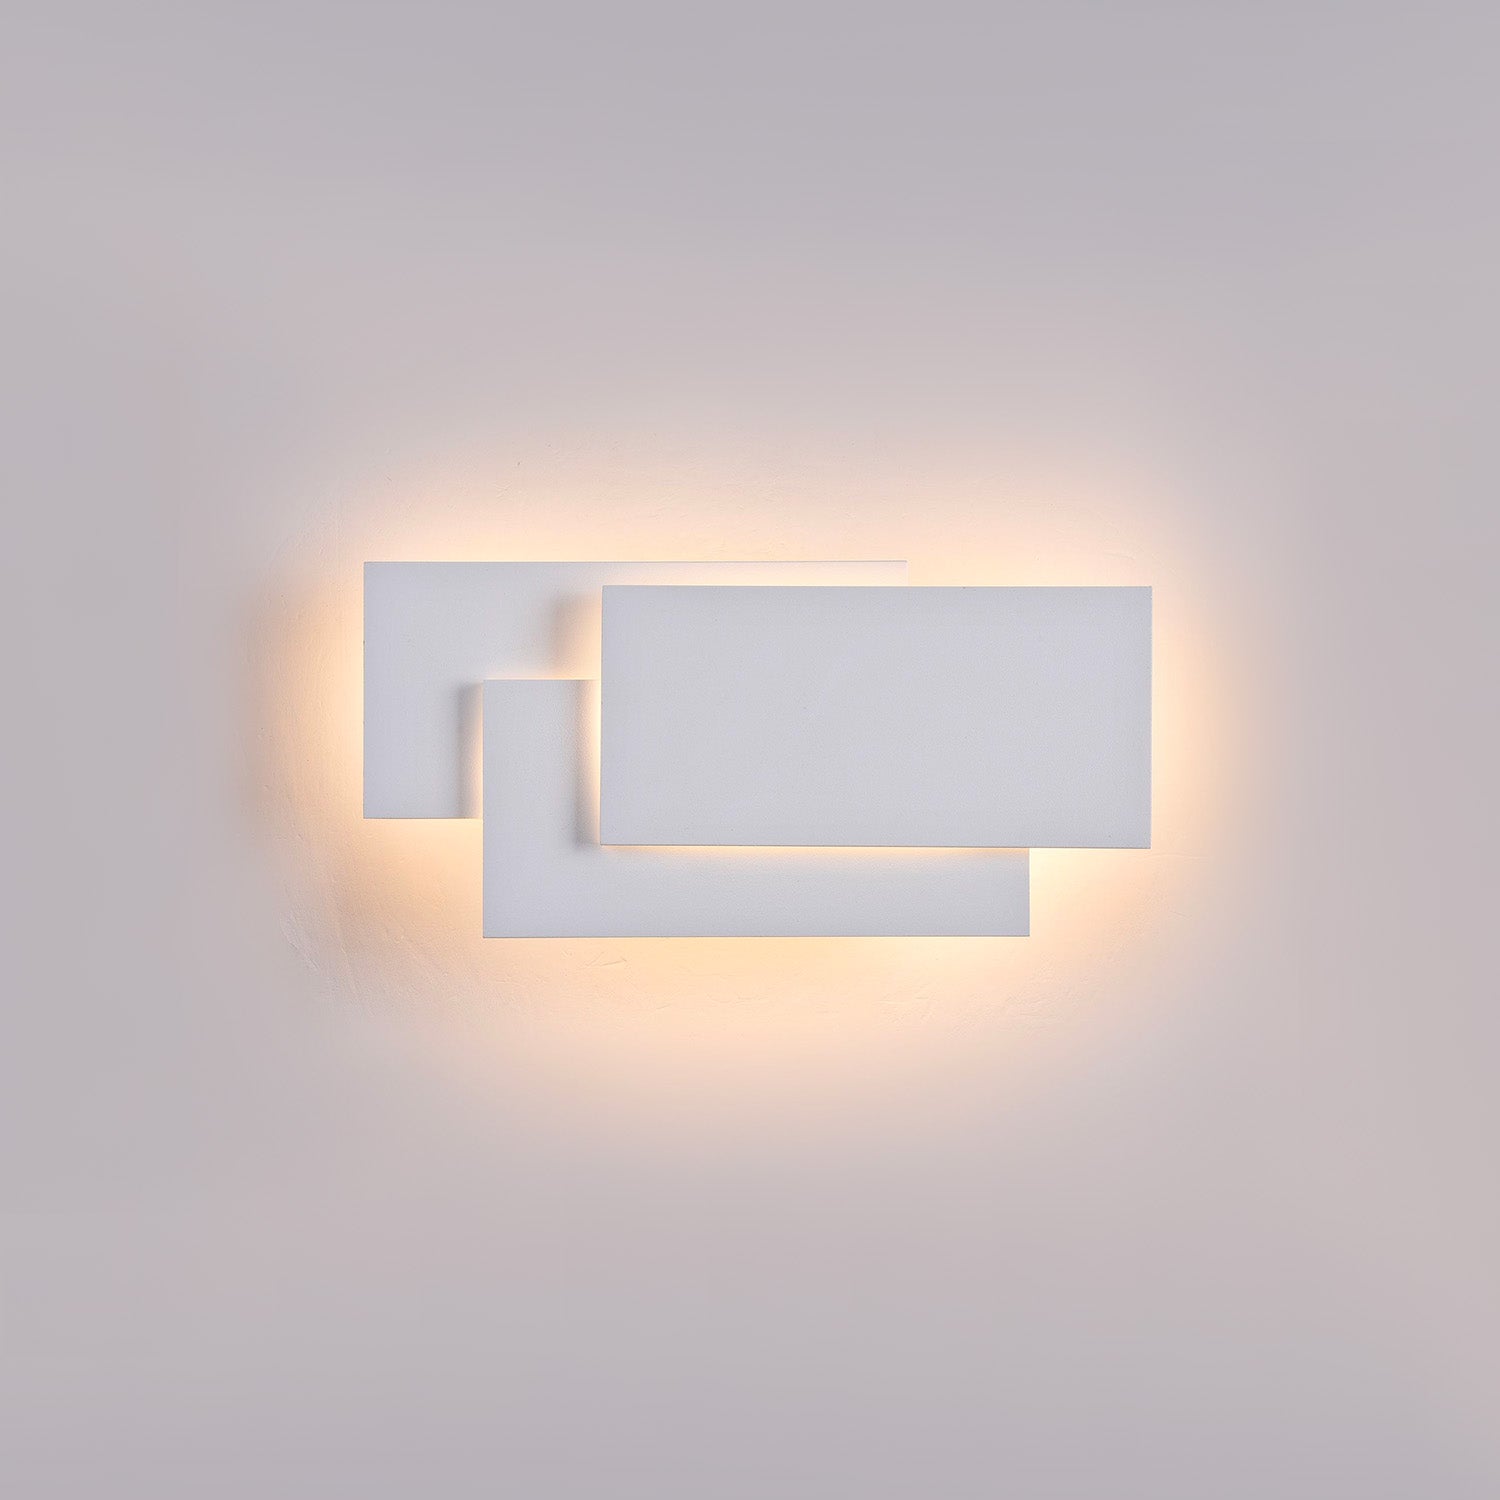 TRAME C - White steel geometric design wall light